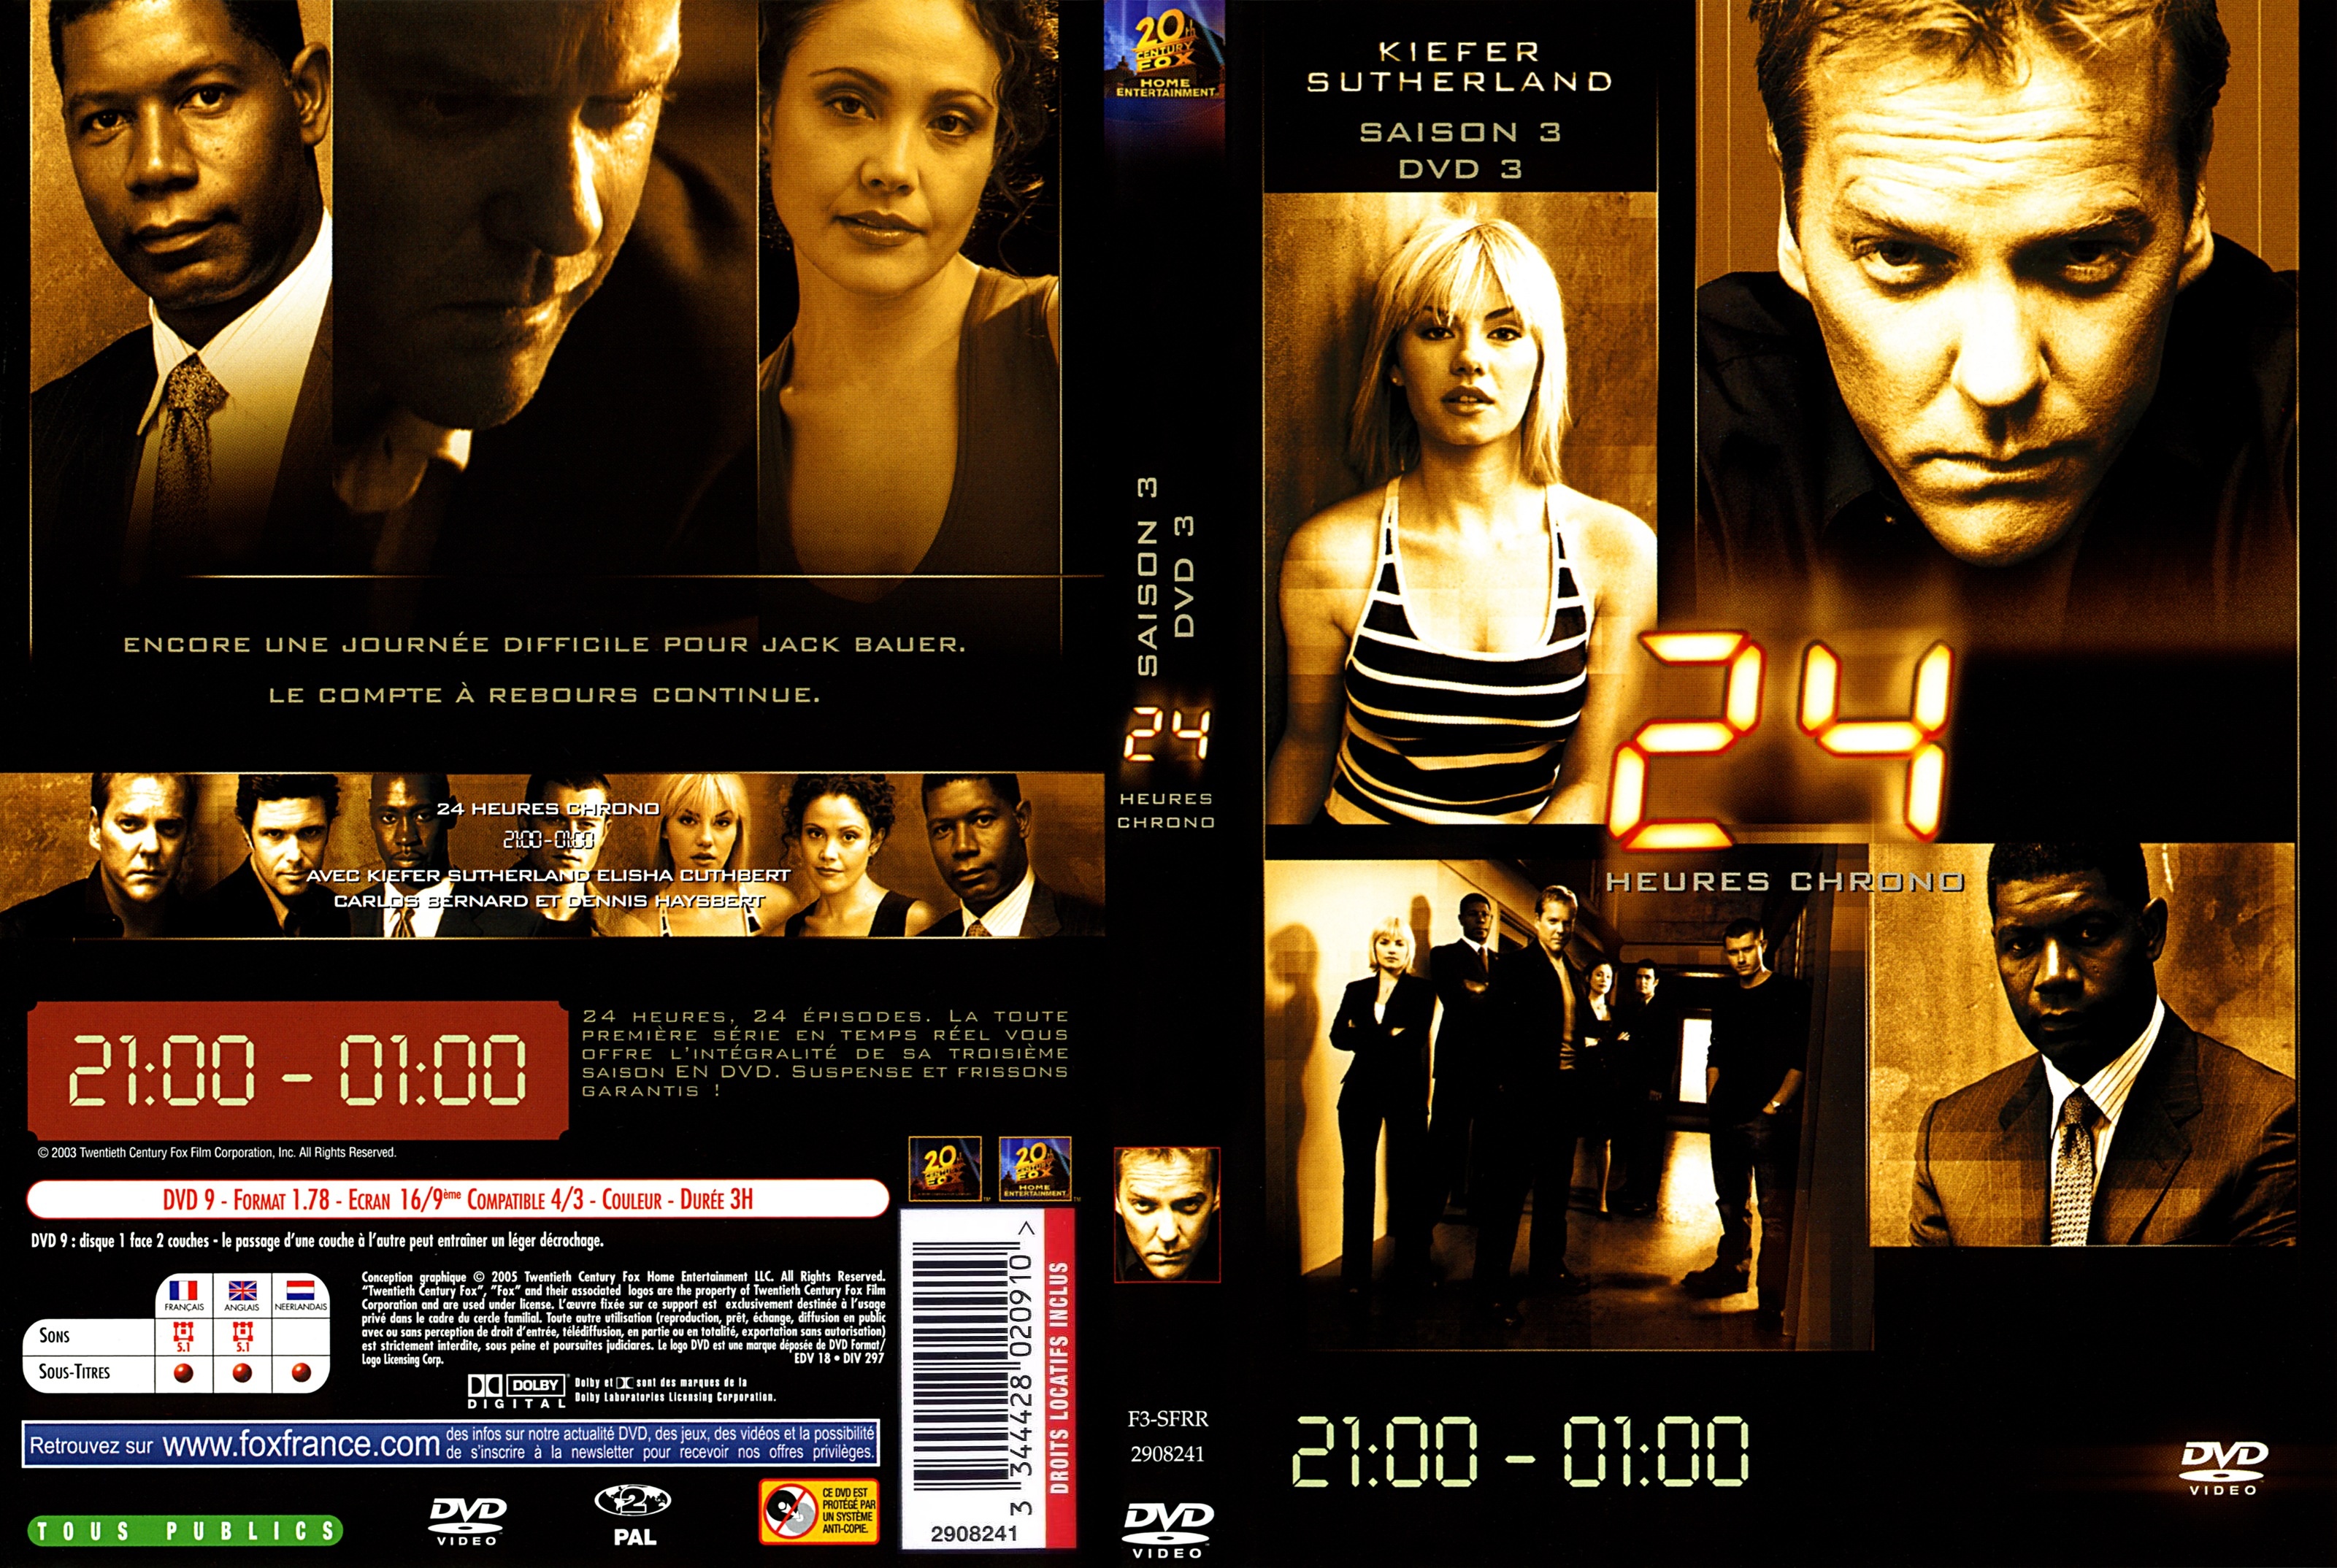 Jaquette DVD 24 heures chrono saison 3 DVD 3